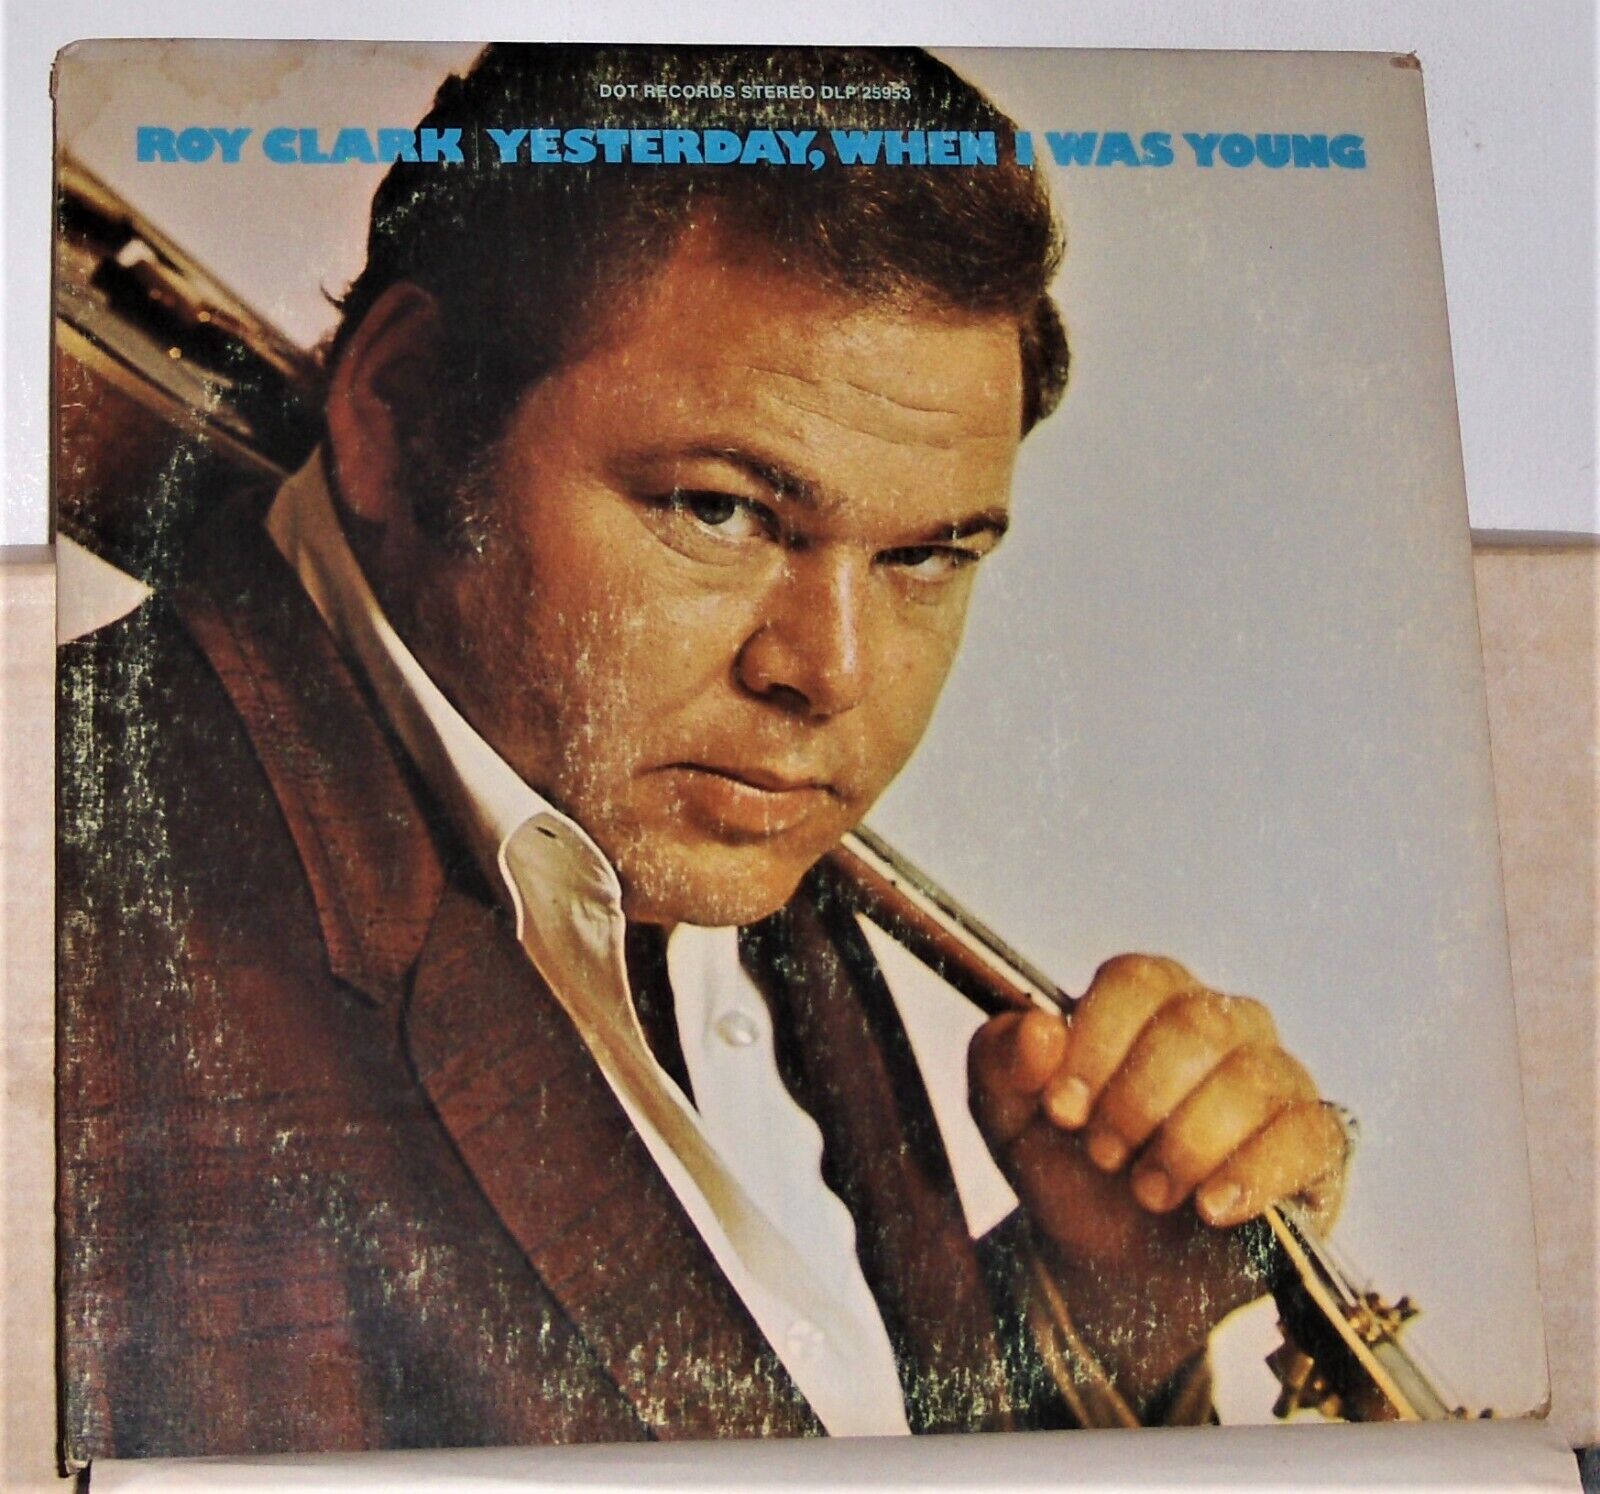 Roy Clark – Yesterday When I Was Young - 1969 Vinyl LP Record Album